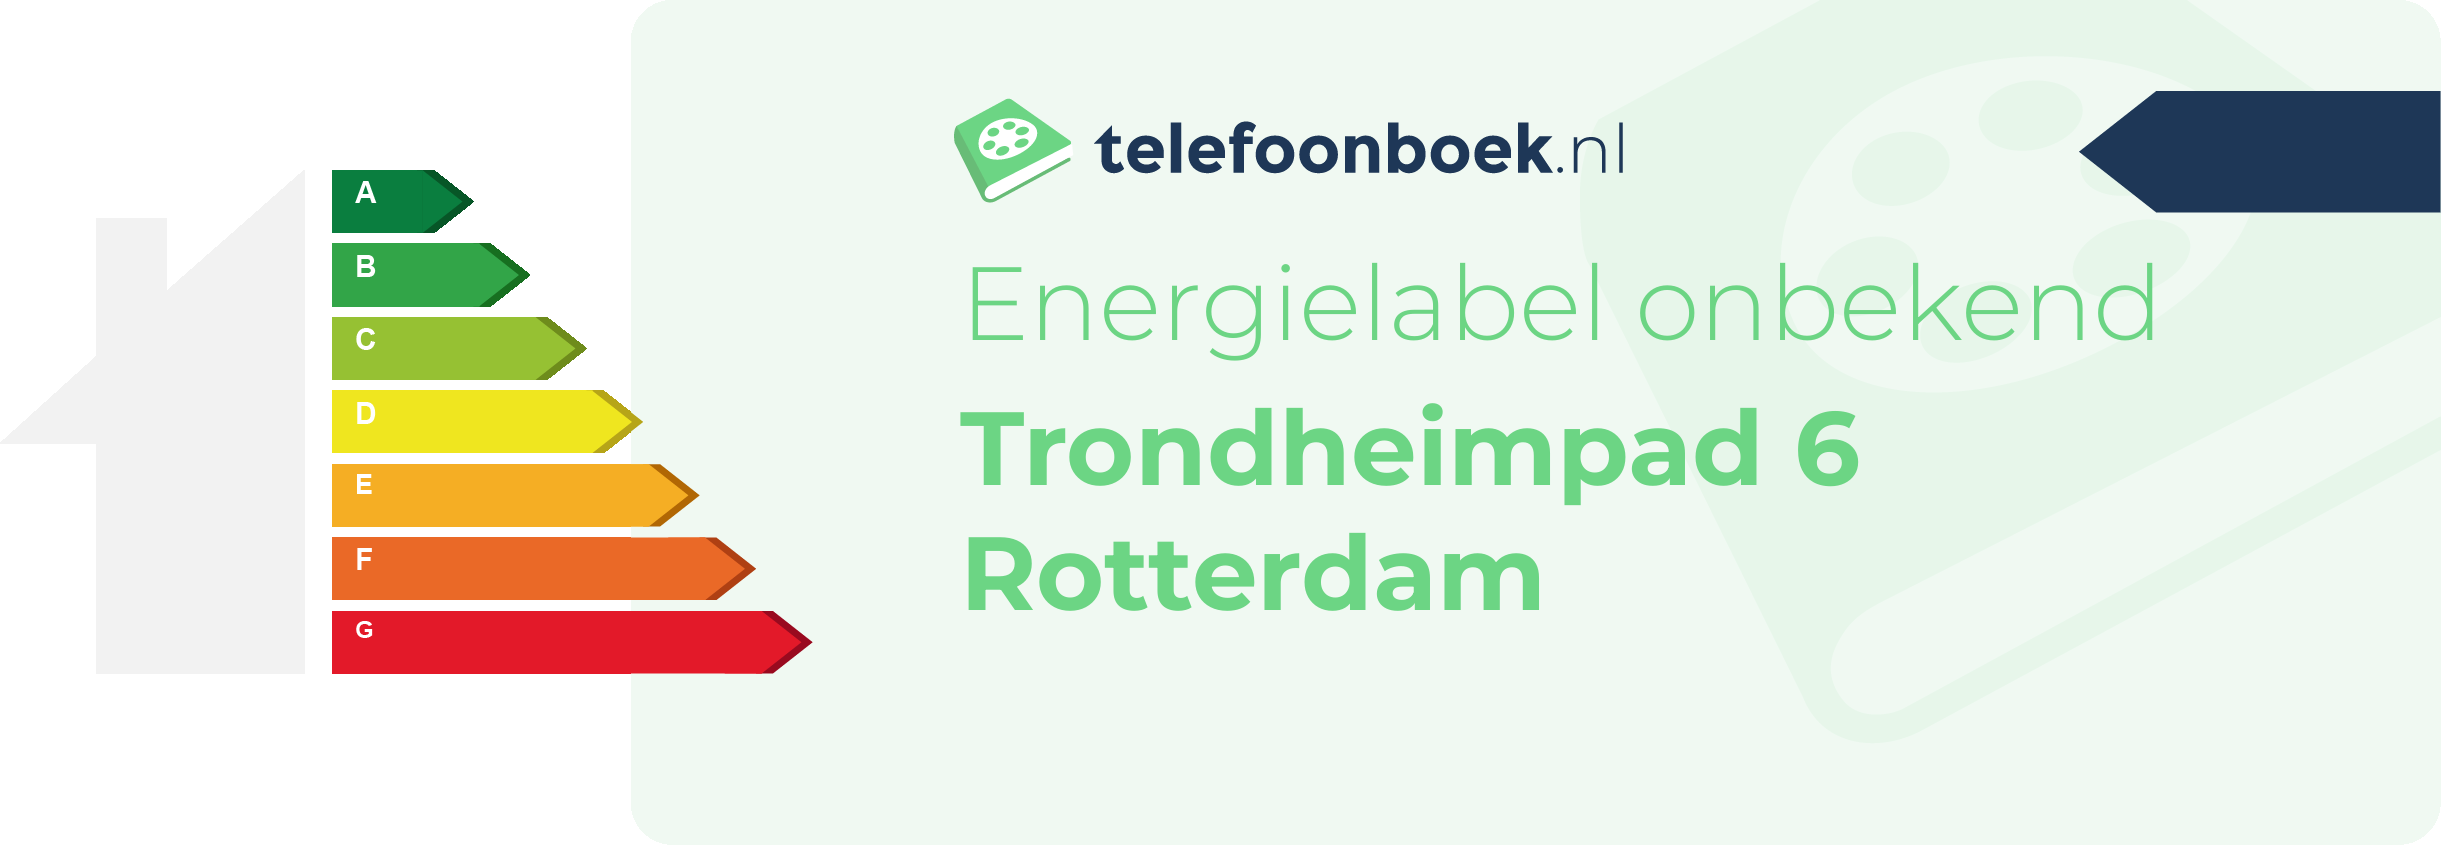 Energielabel Trondheimpad 6 Rotterdam